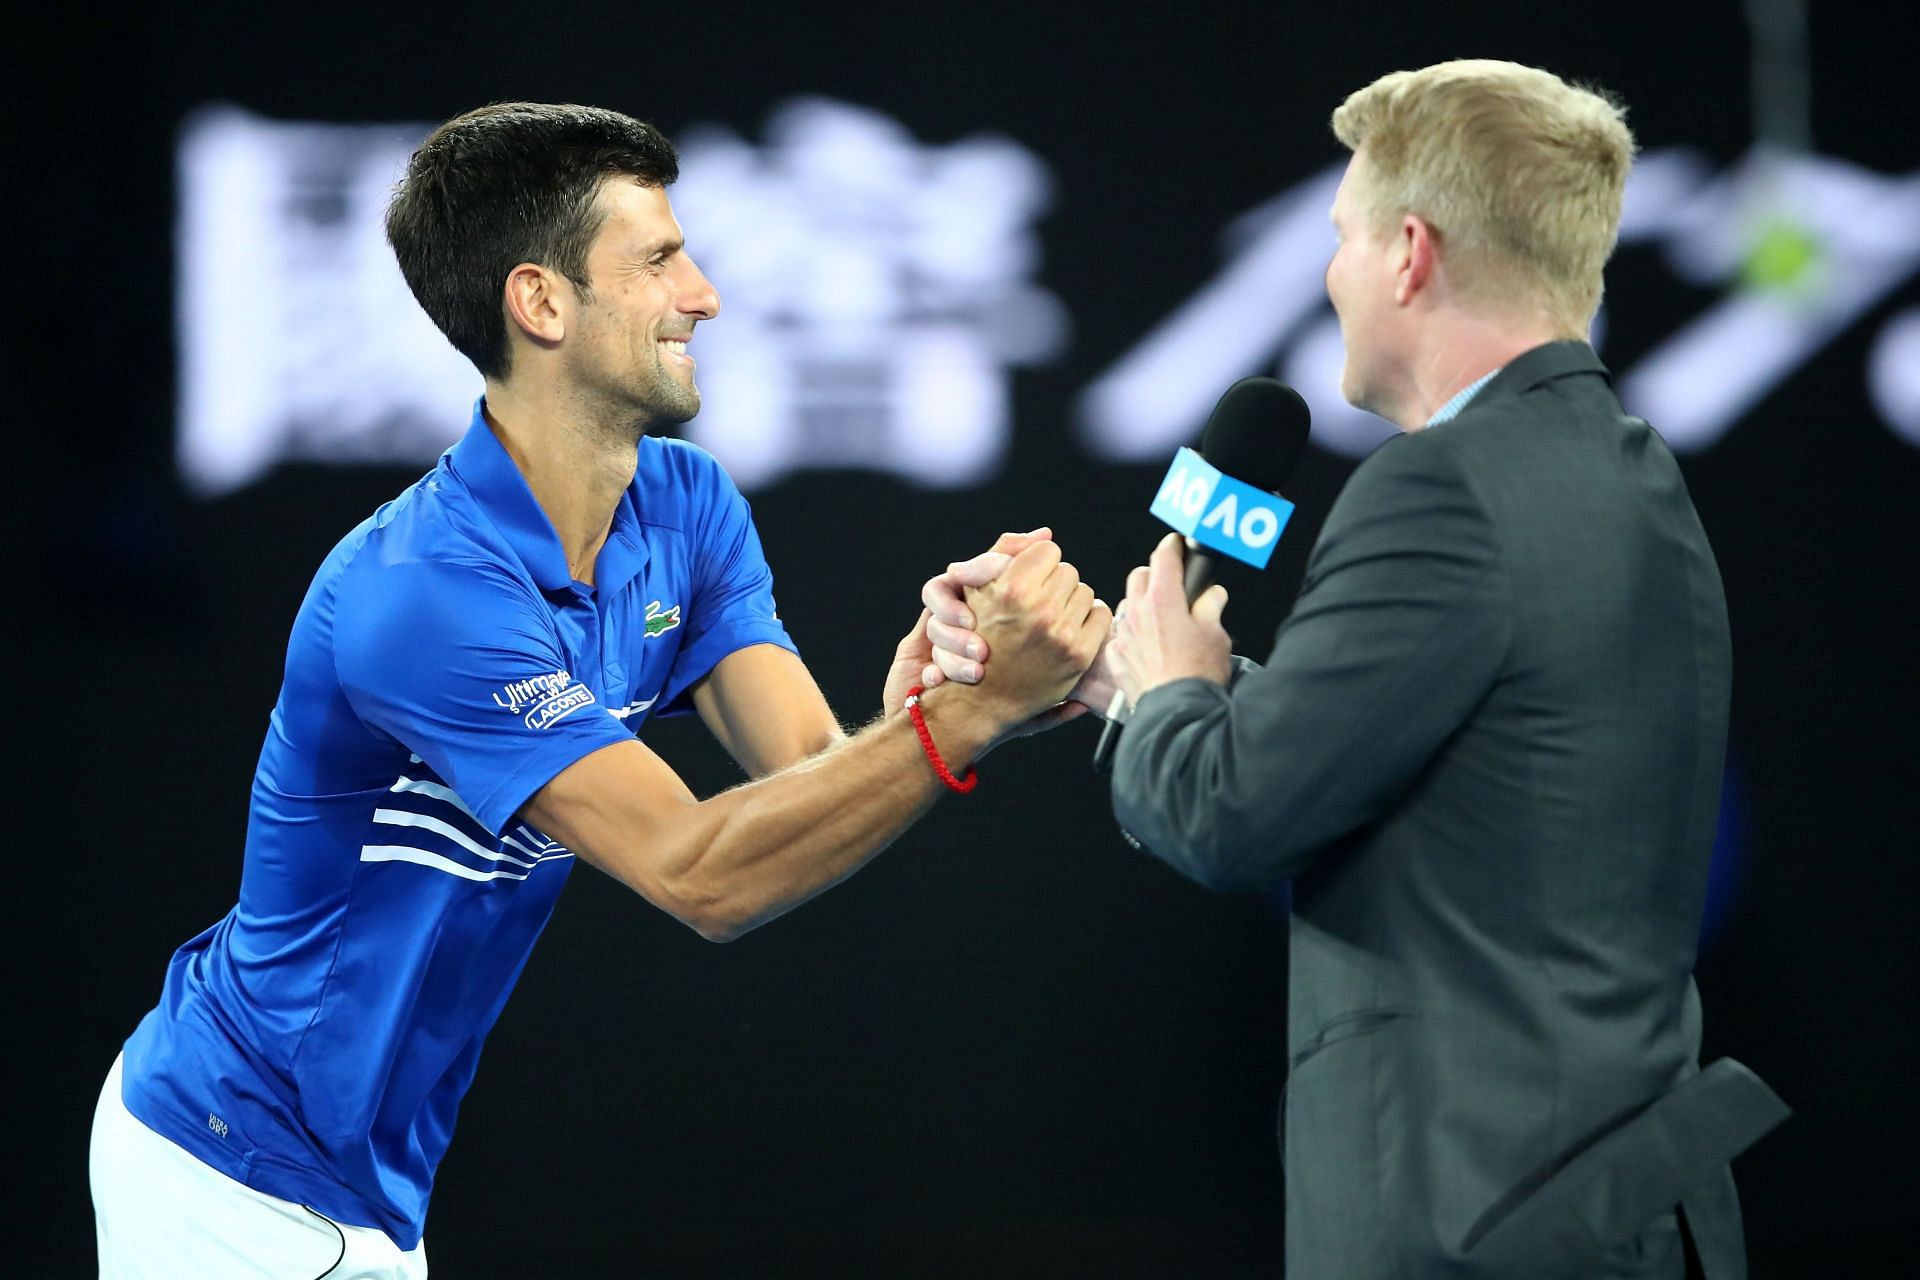 Jim Courier is all praise for Novak Djokovic